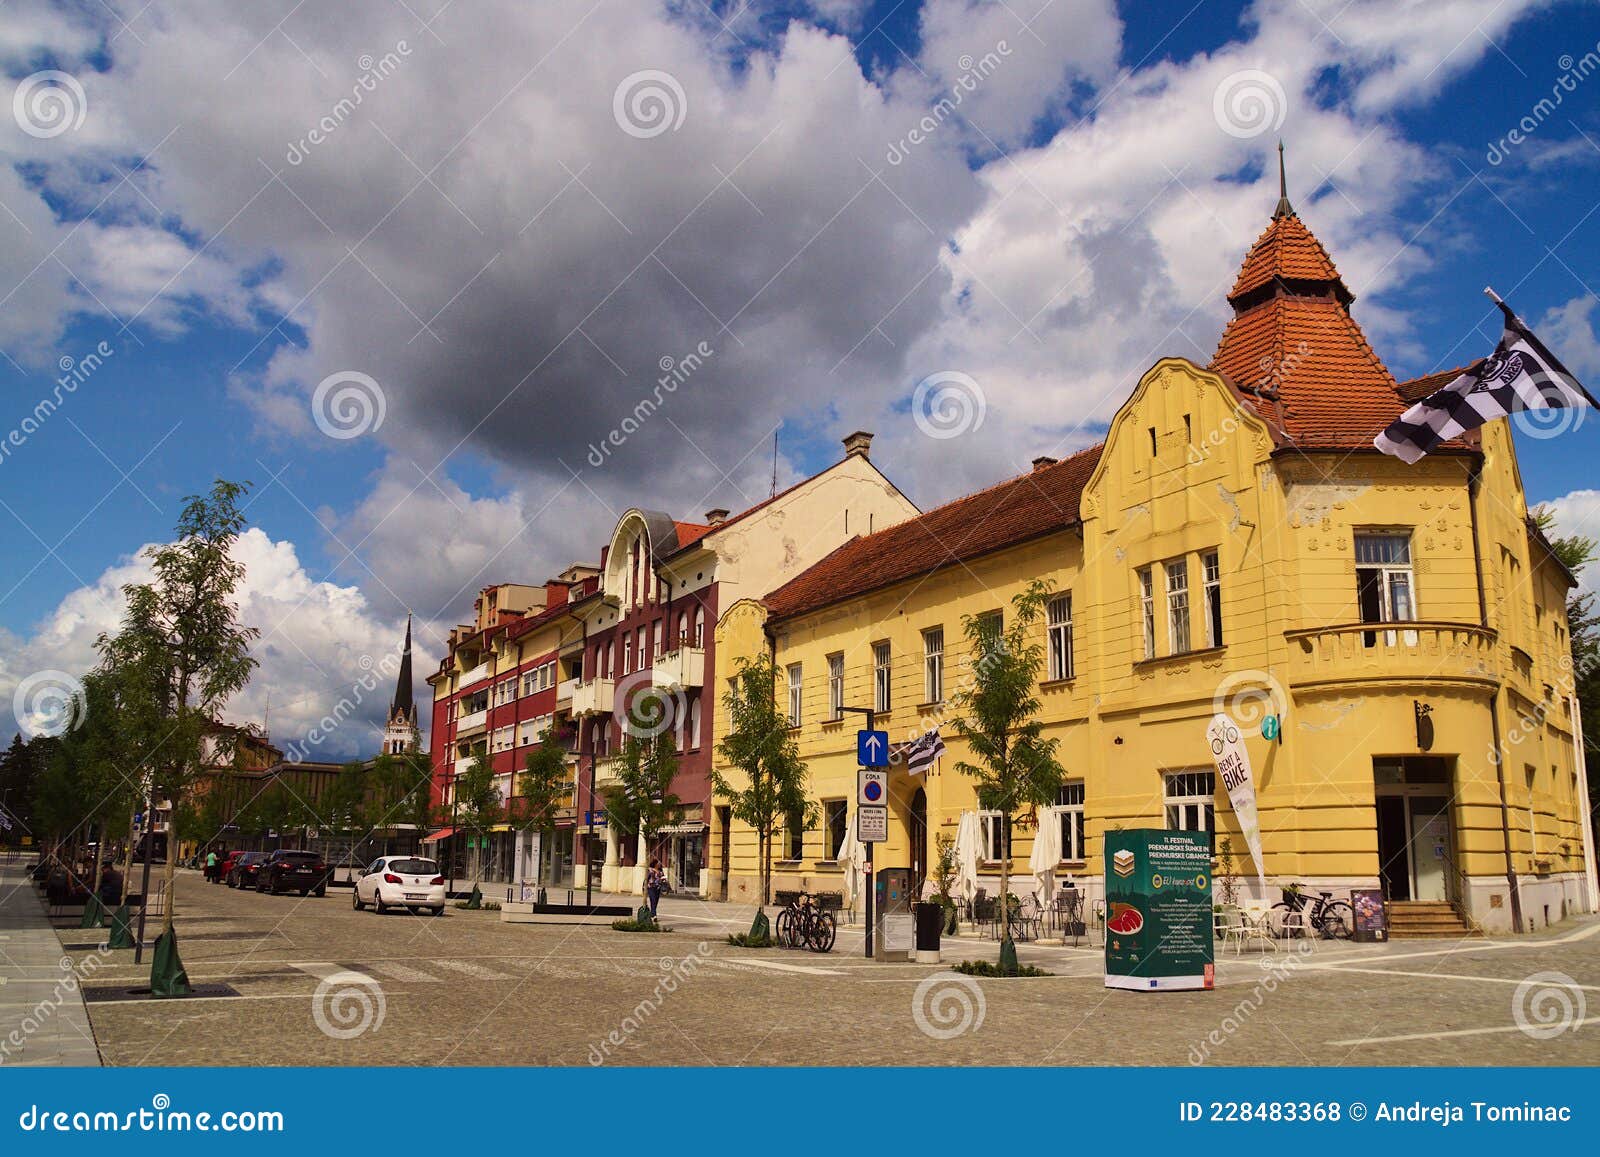 https://thumbs.dreamstime.com/z/slovenska-street-murska-sobota-slovenia-slovenska-street-historic-city-center-murska-sobota-prekmurje-slovenia-sunny-228483368.jpg